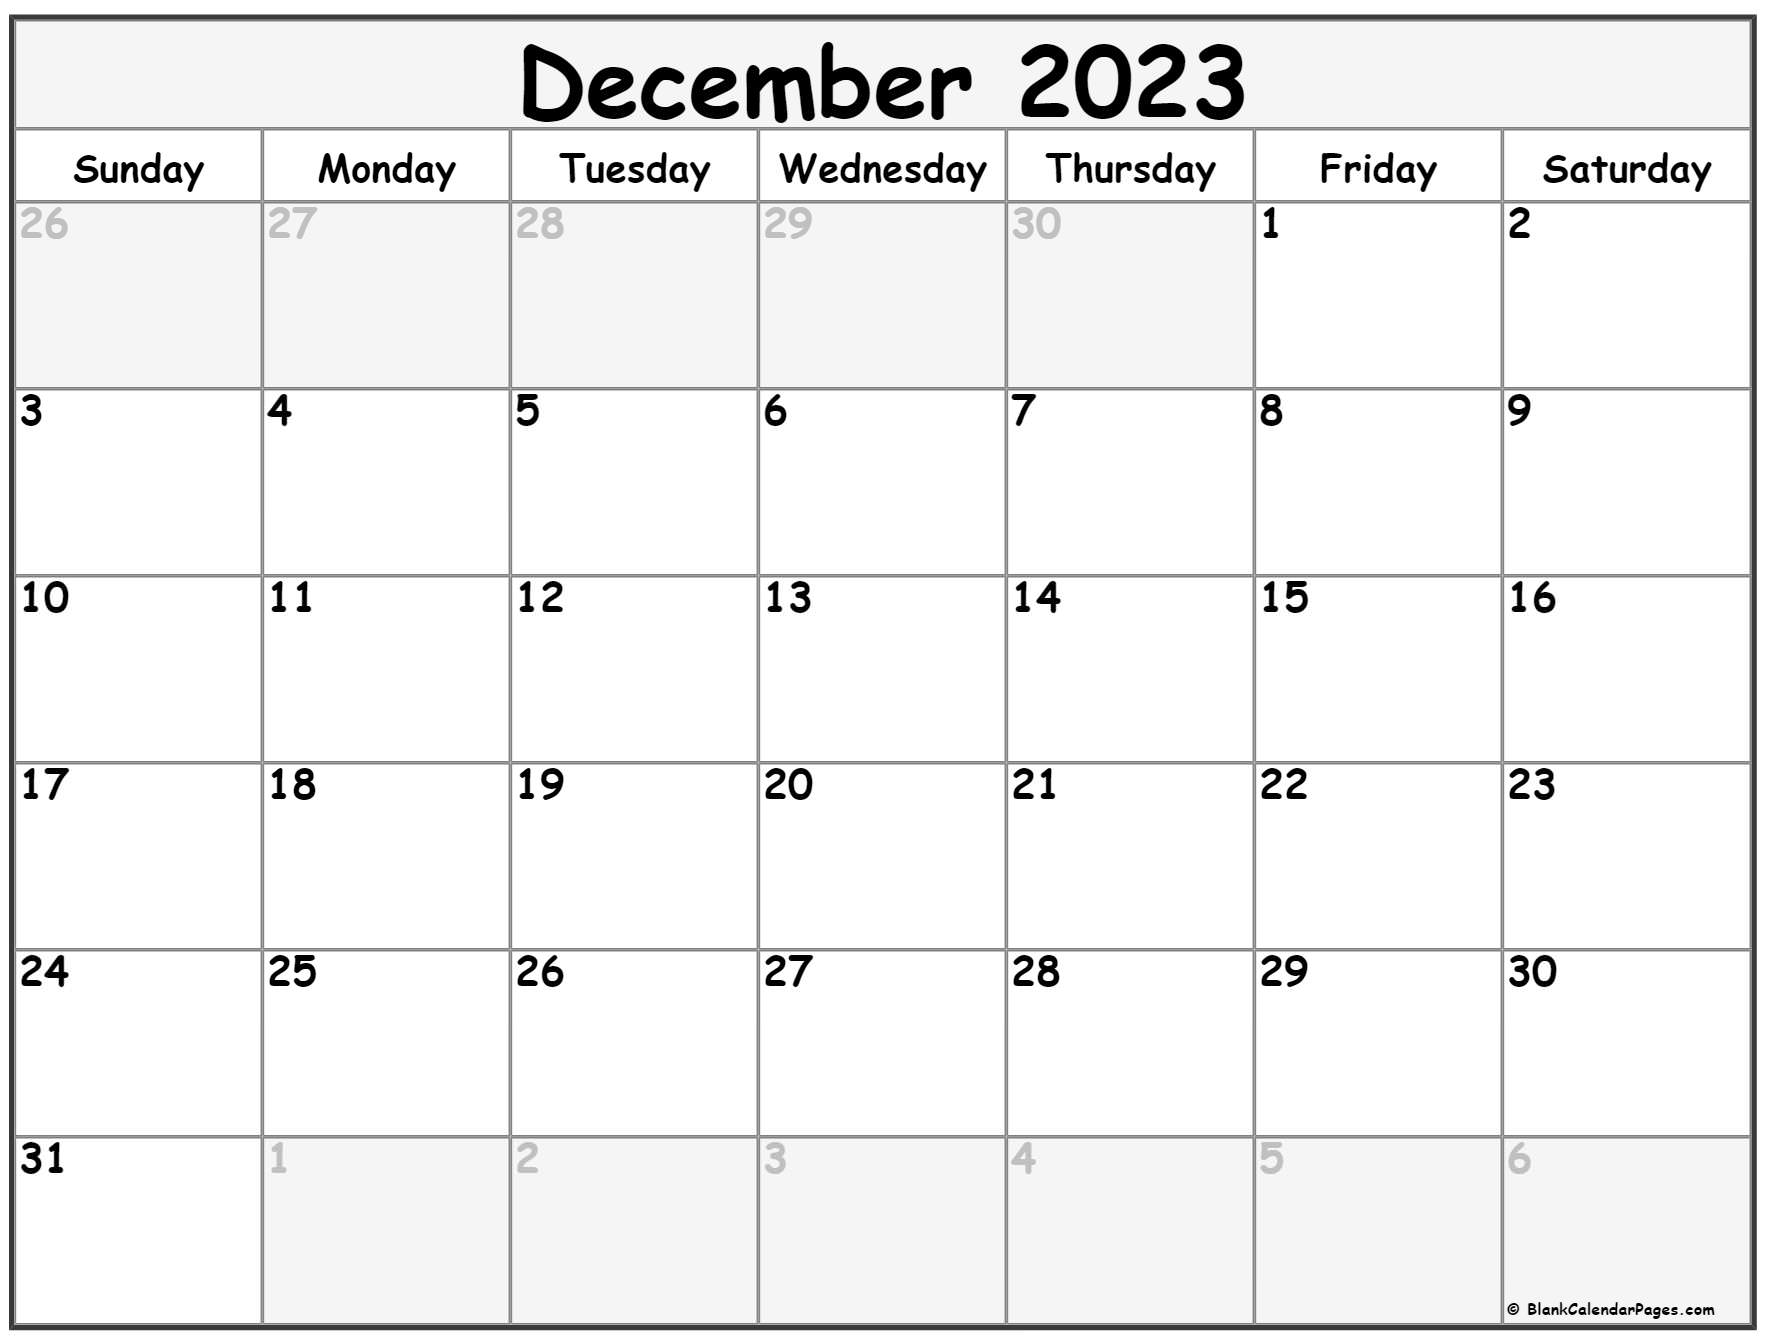 December 2023 calendar free printable calendar